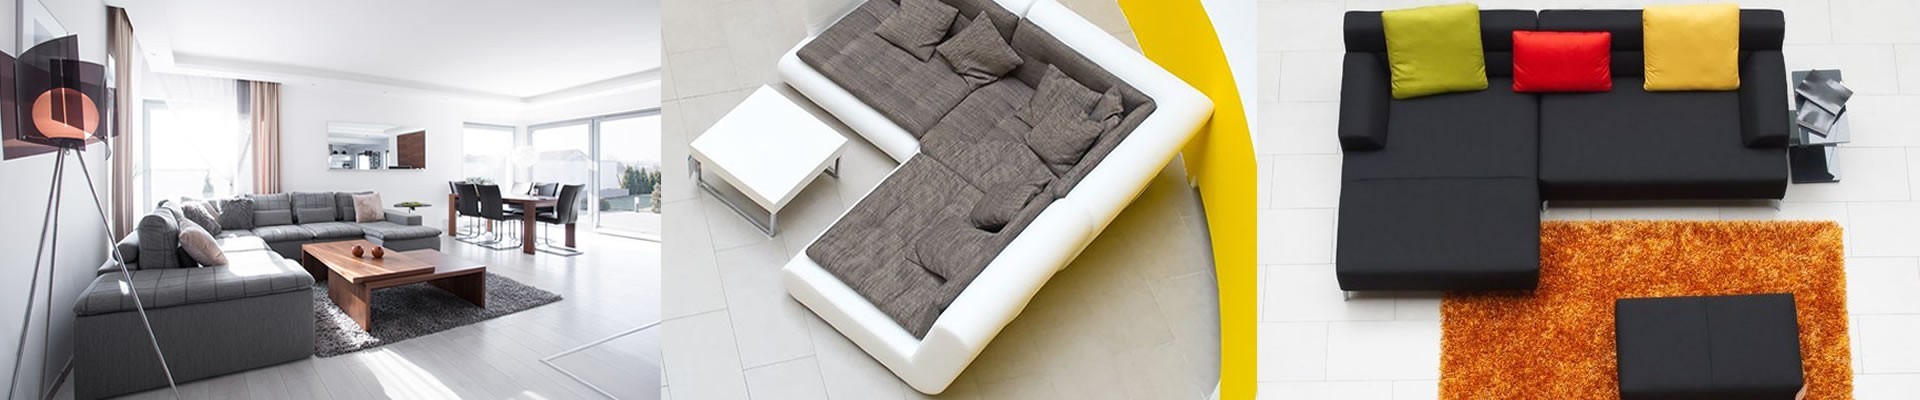 Corner Sofas | L Shaped Sofa & Corner Sofa Units